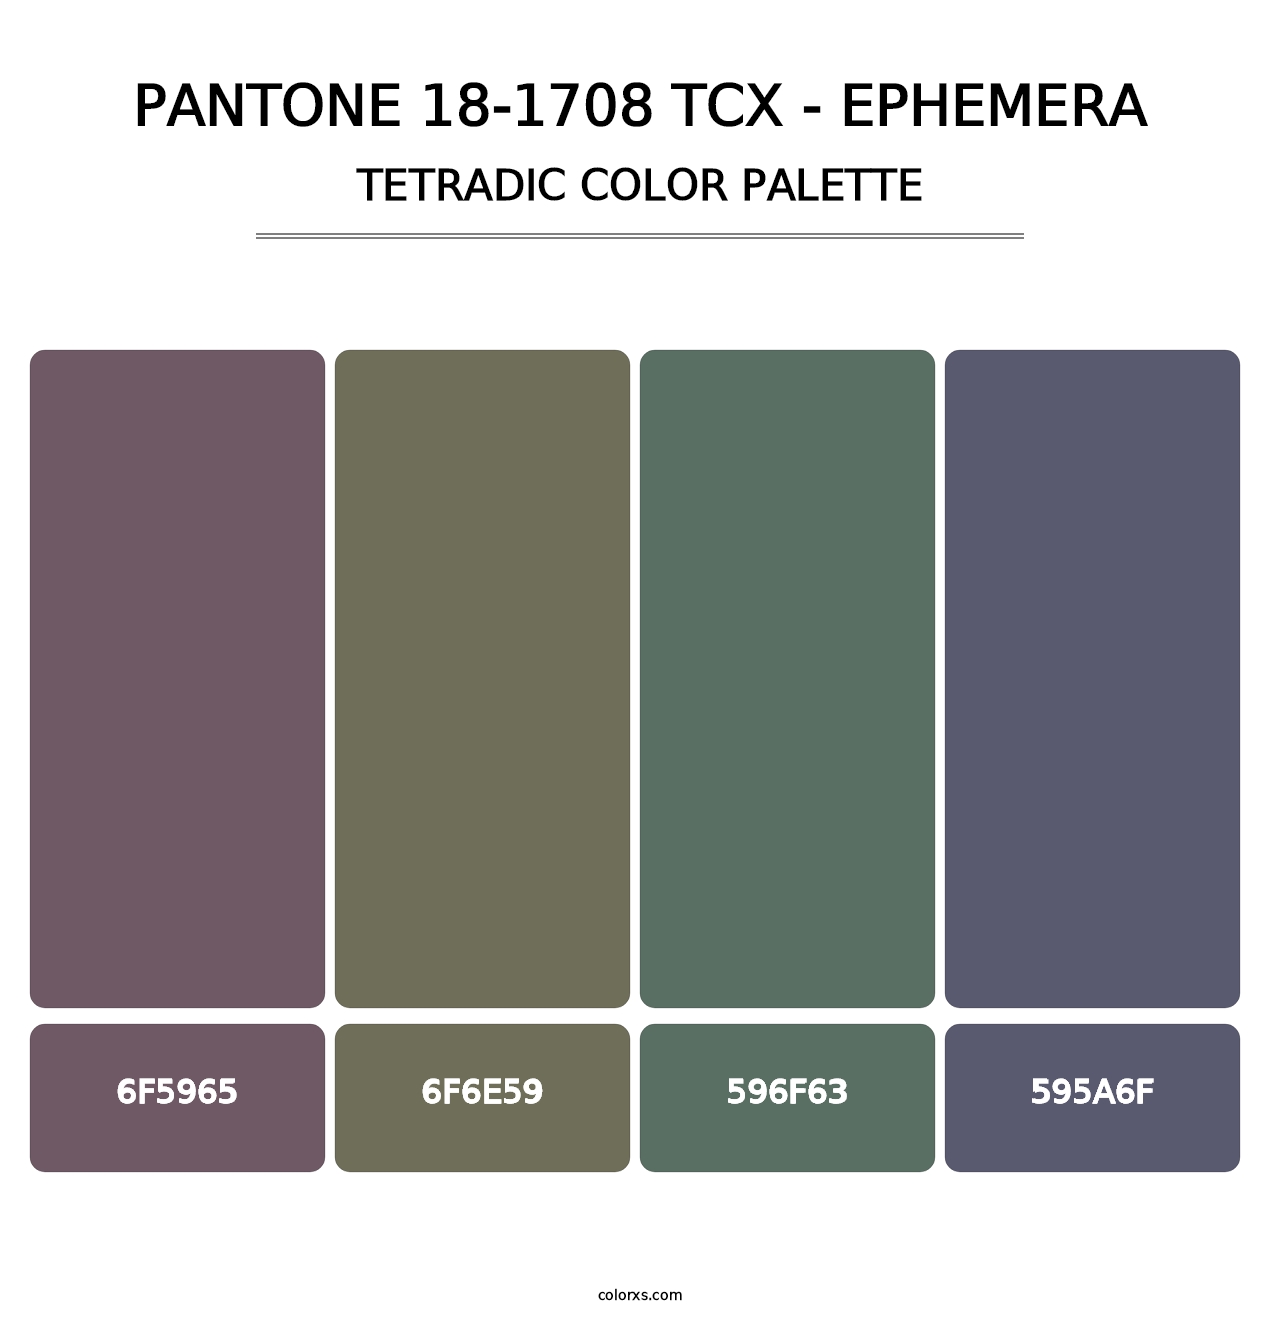 PANTONE 18-1708 TCX - Ephemera - Tetradic Color Palette